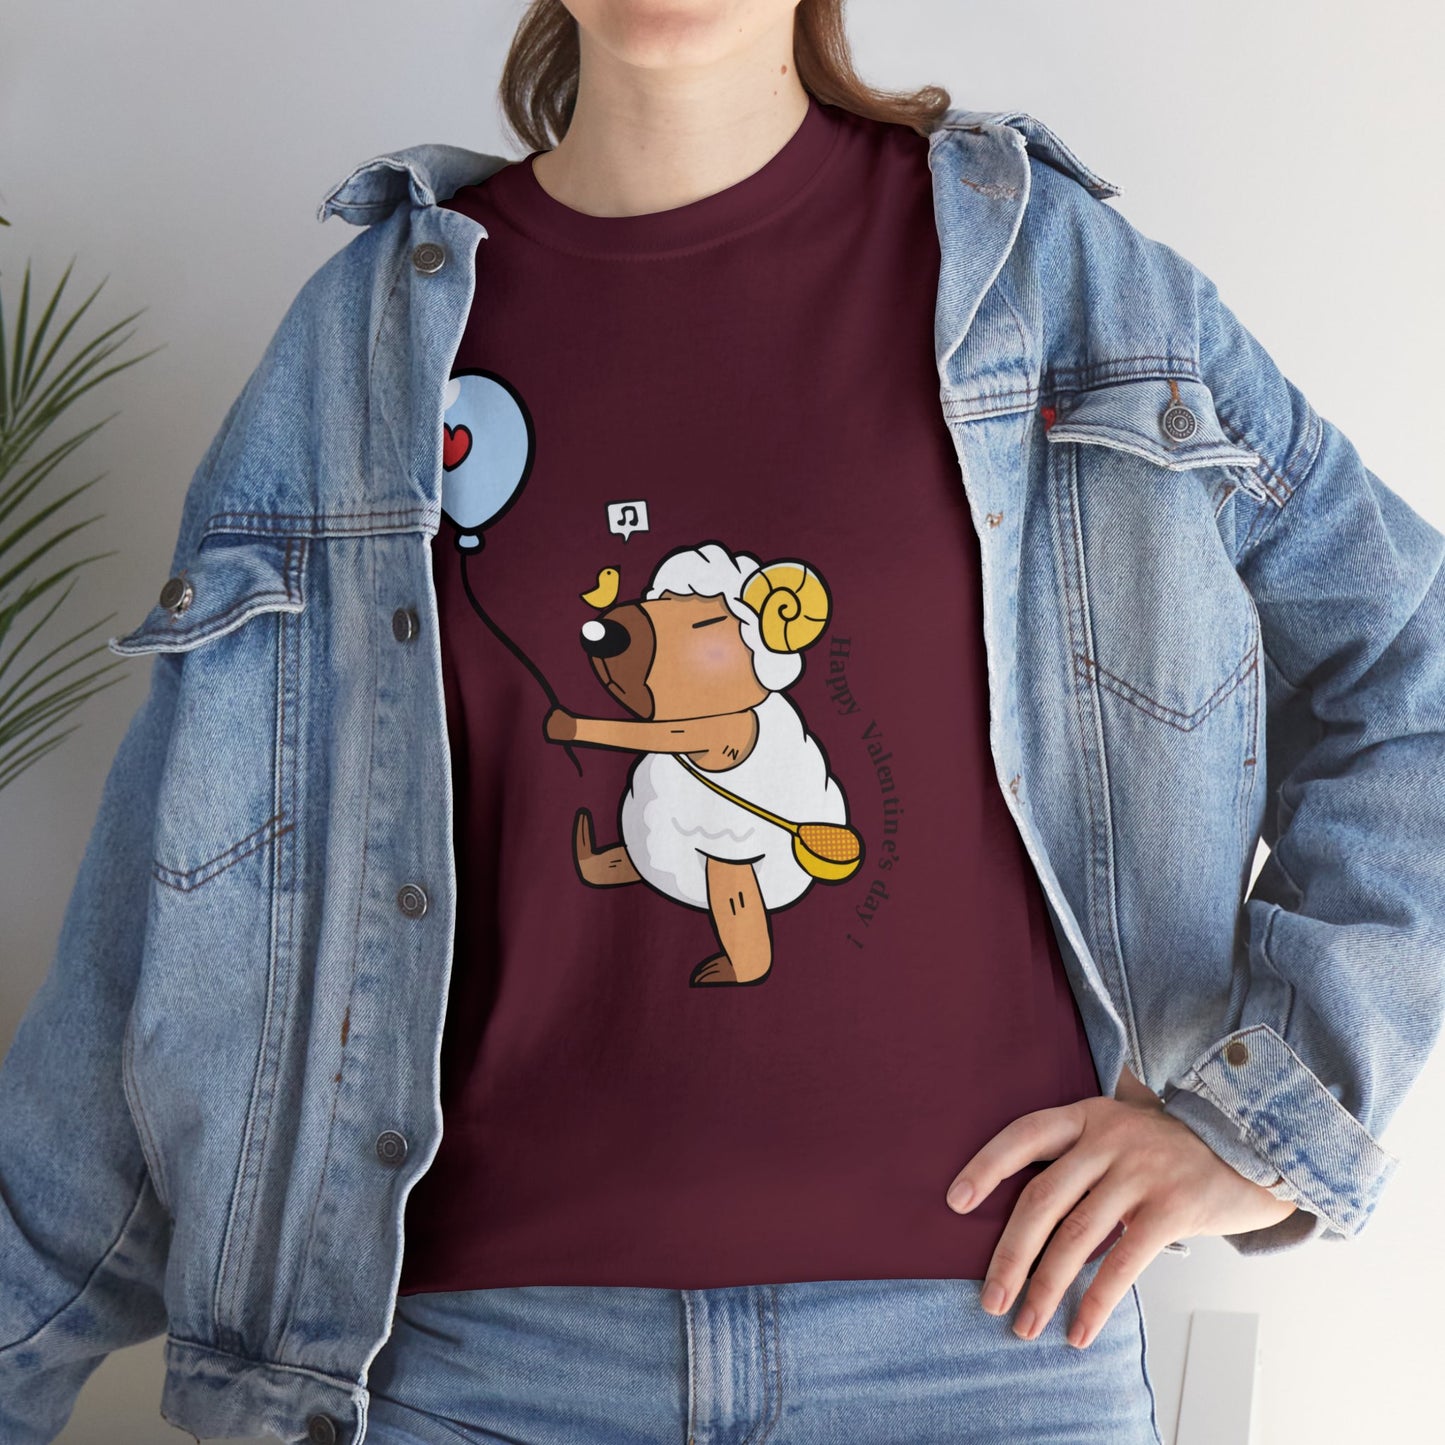 Aries Capybara T-Shirt for Men